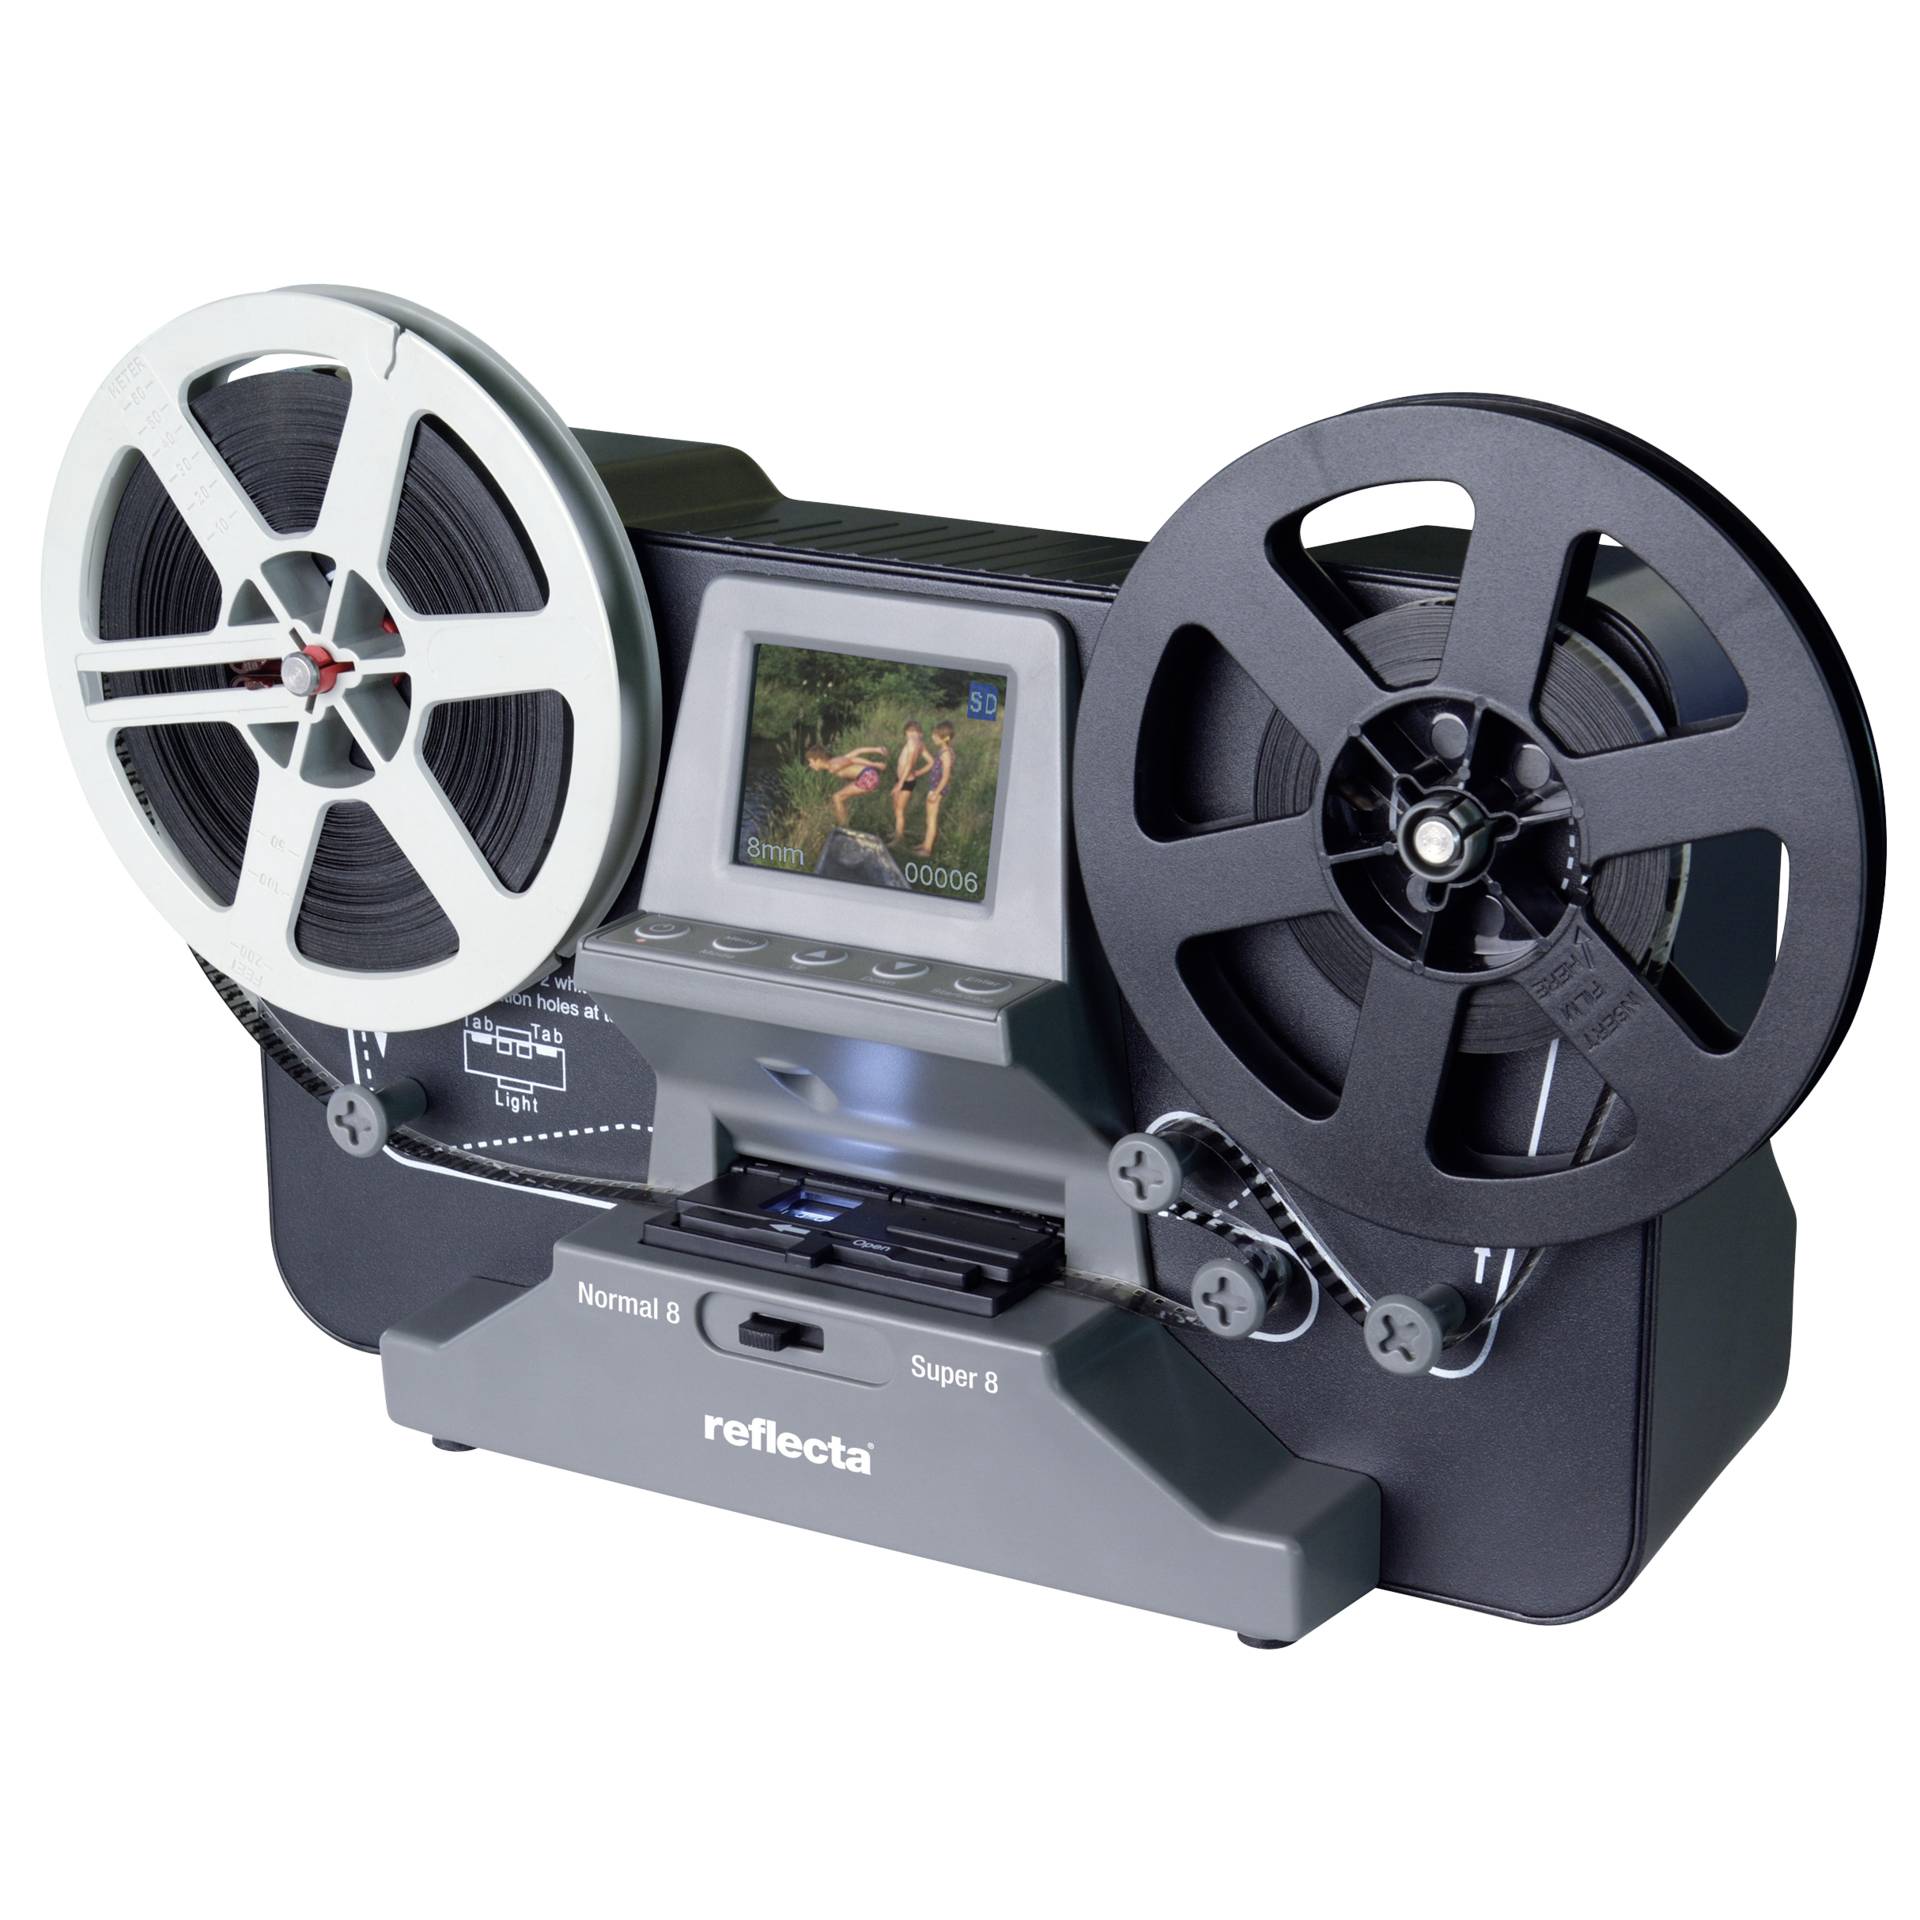 Reflecta -REFLECTA 66020 8 Film-Scanner -1920 x 1080 p -1280 x p -CMOS -Normal 8 (66040) -Reflecta Hardware/Electronic Grooves.land/Playthek